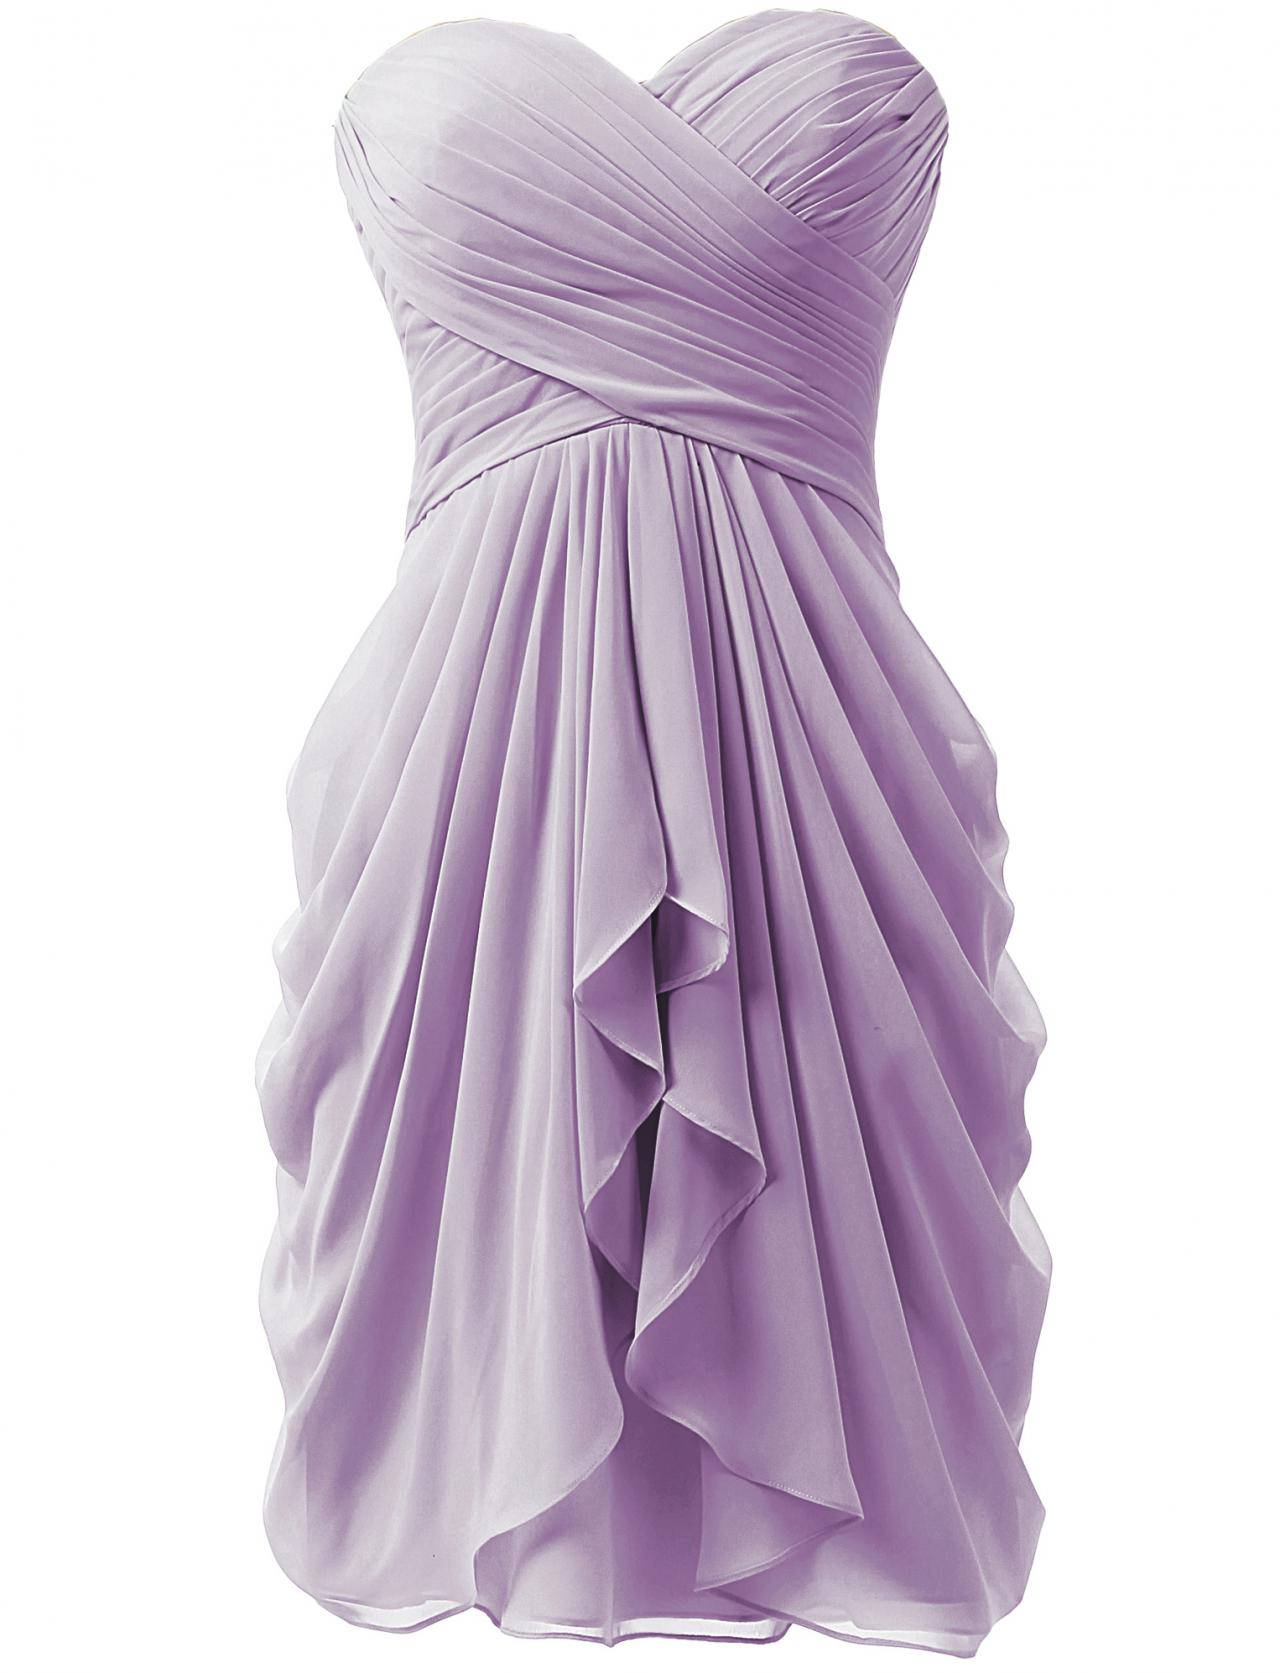 Simple Lavender Short Bridesmaid Dresses, Short Prom Dresses, Cute Wedding Party Dresses